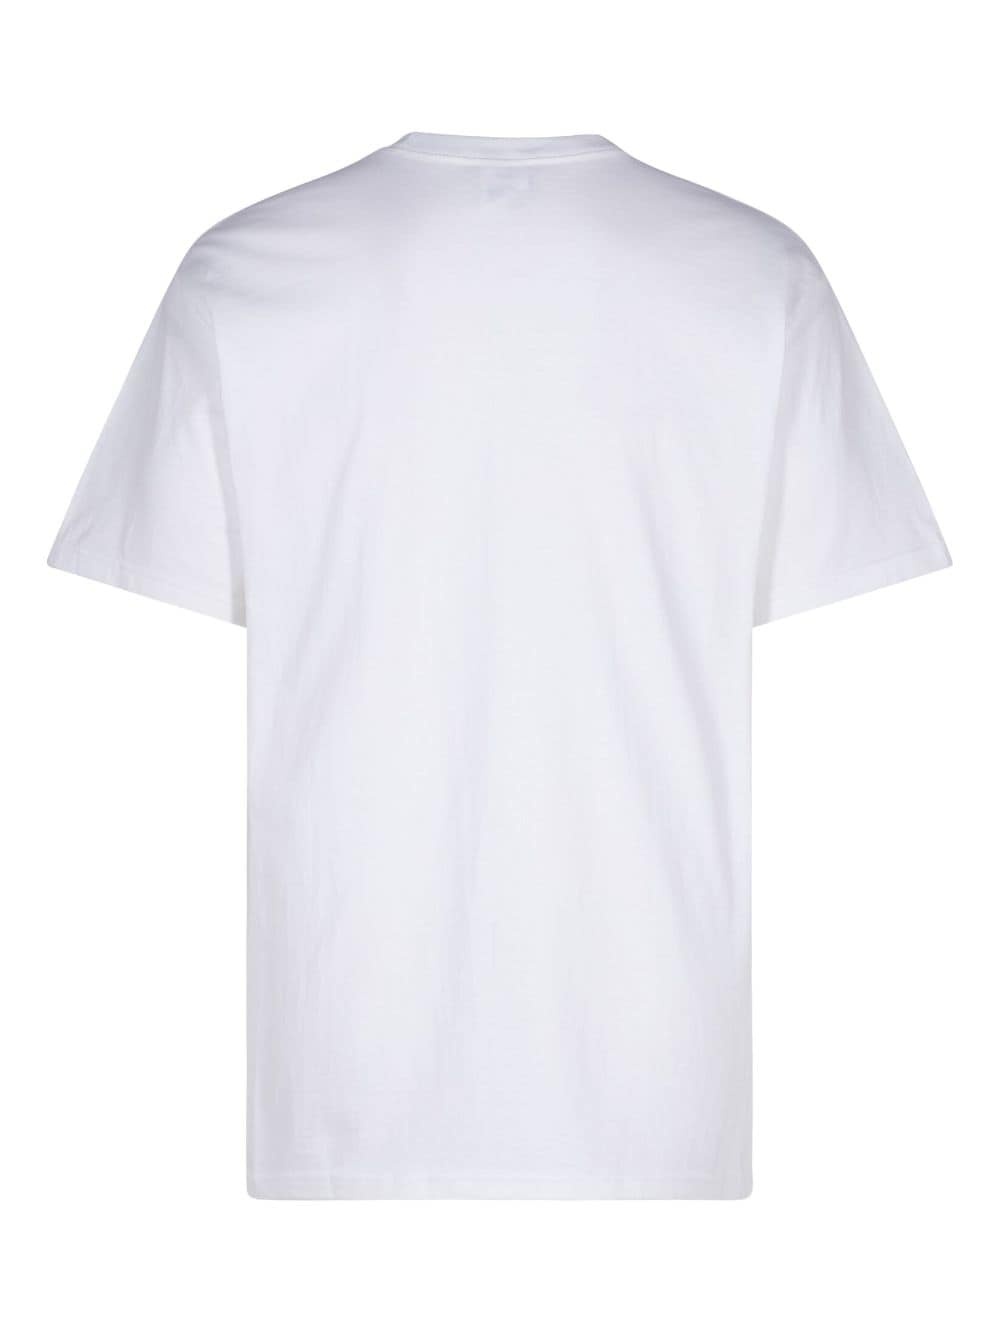 Warm Up "White" T-shirt - 2